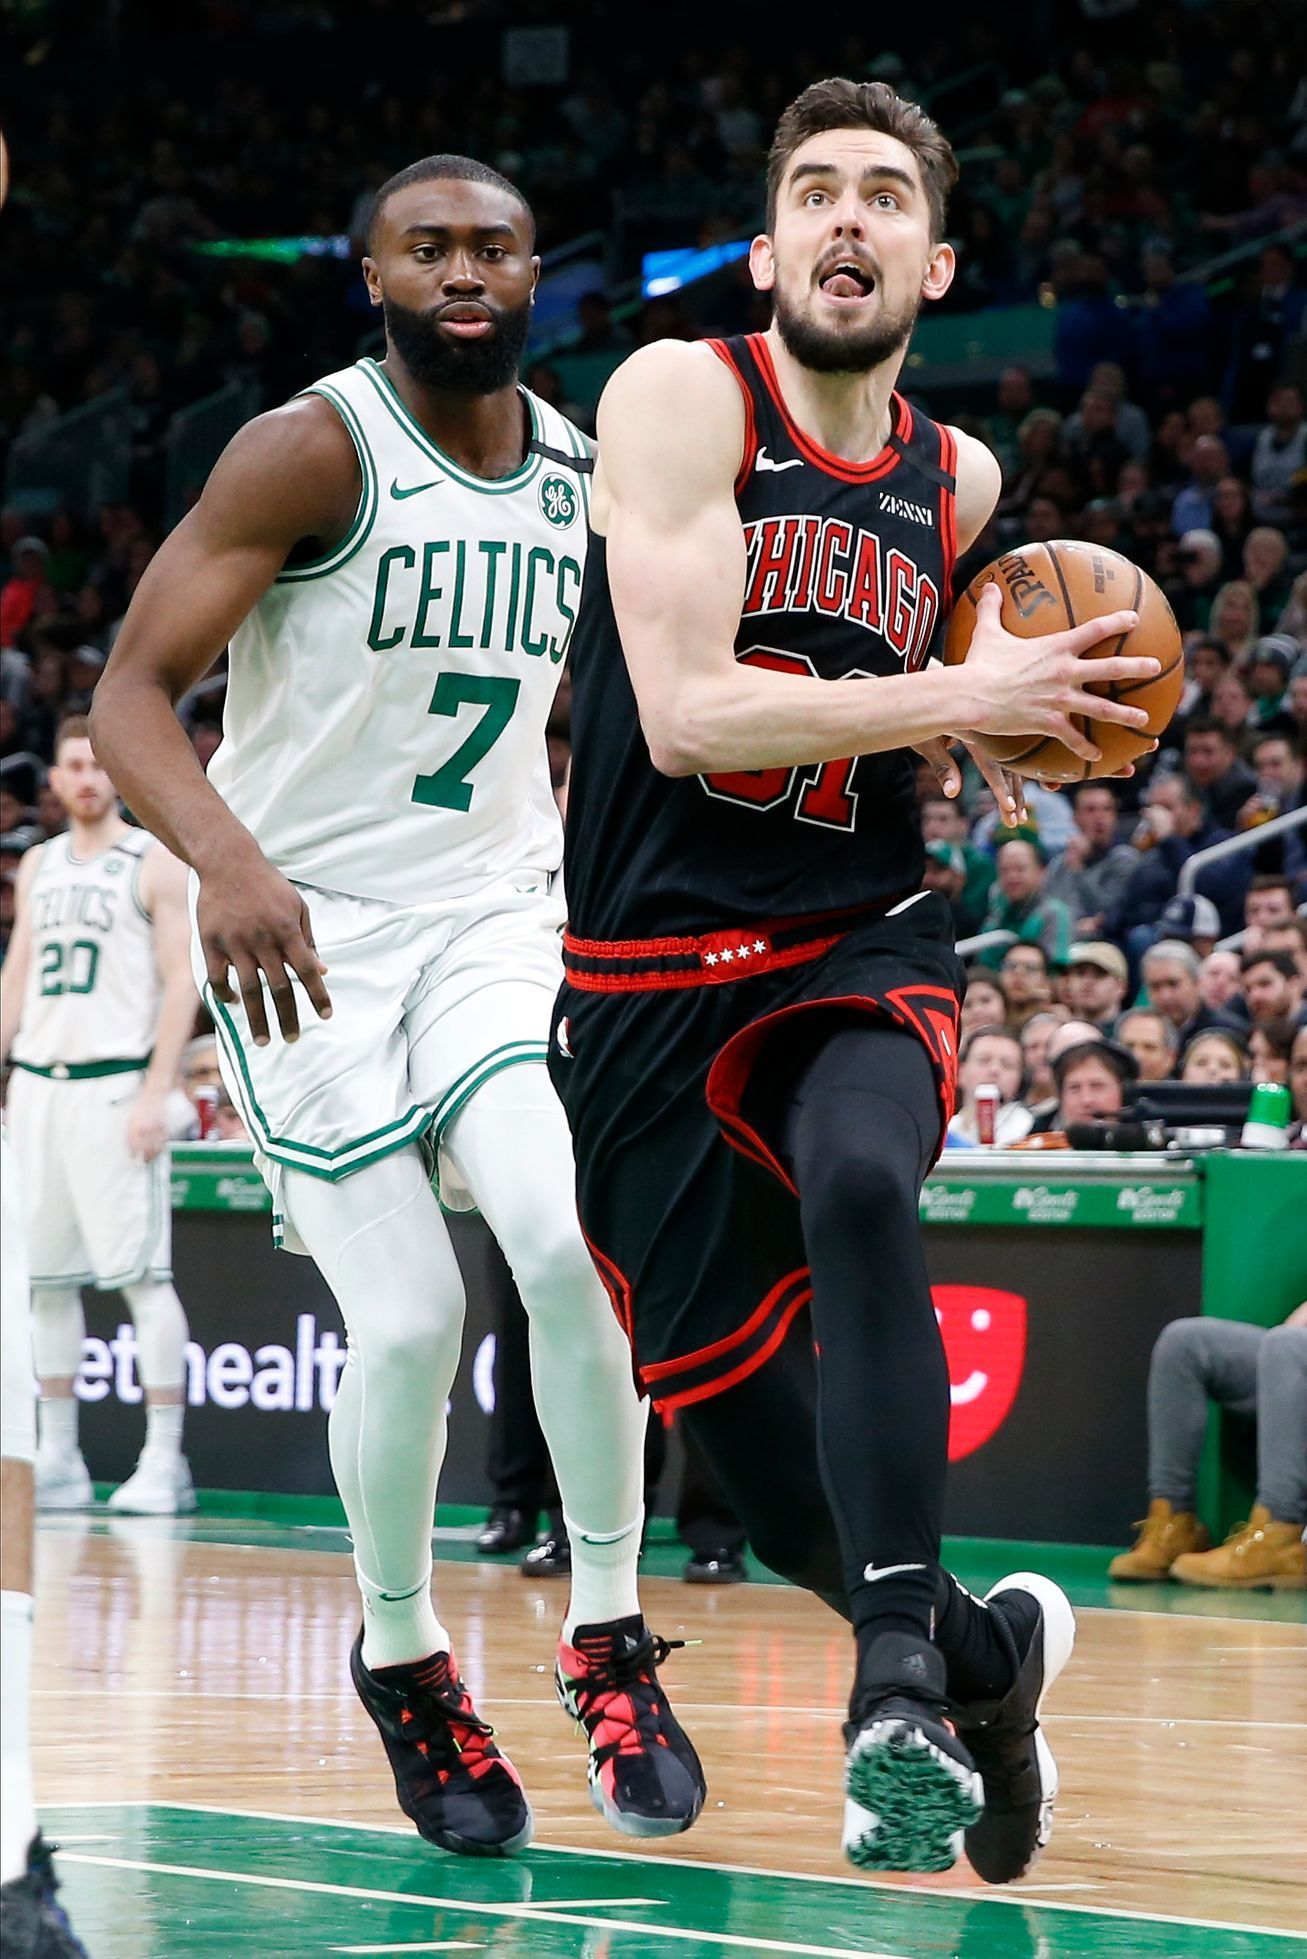 NBA: Chicago Bulls at Boston Celtics, Tomáš Satoranský